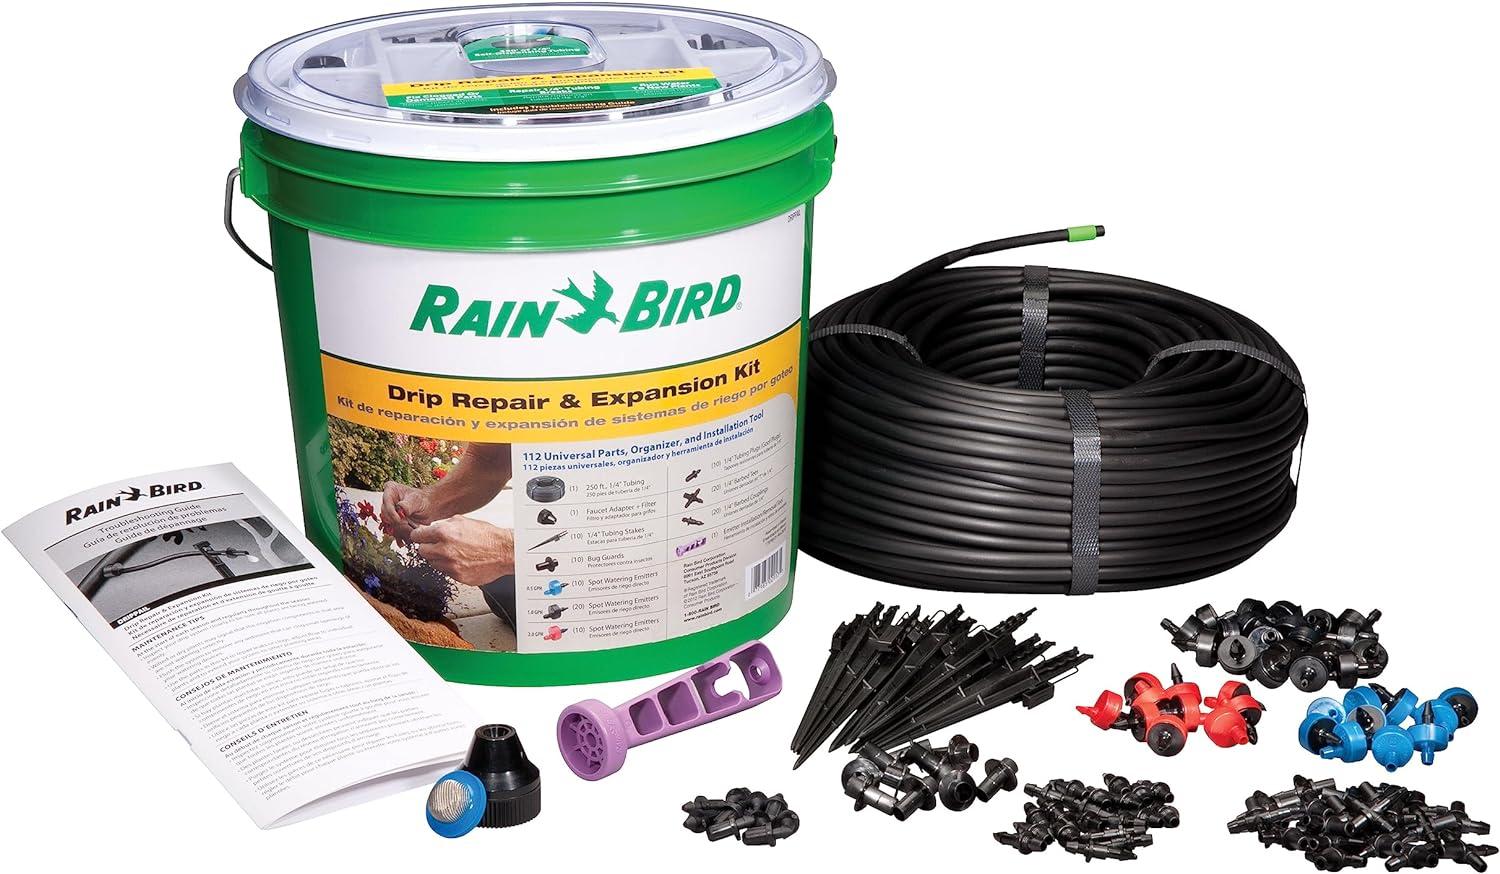 Rain Bird Drip Irrigation Repair and Expansion Kit Bucket for $21.79